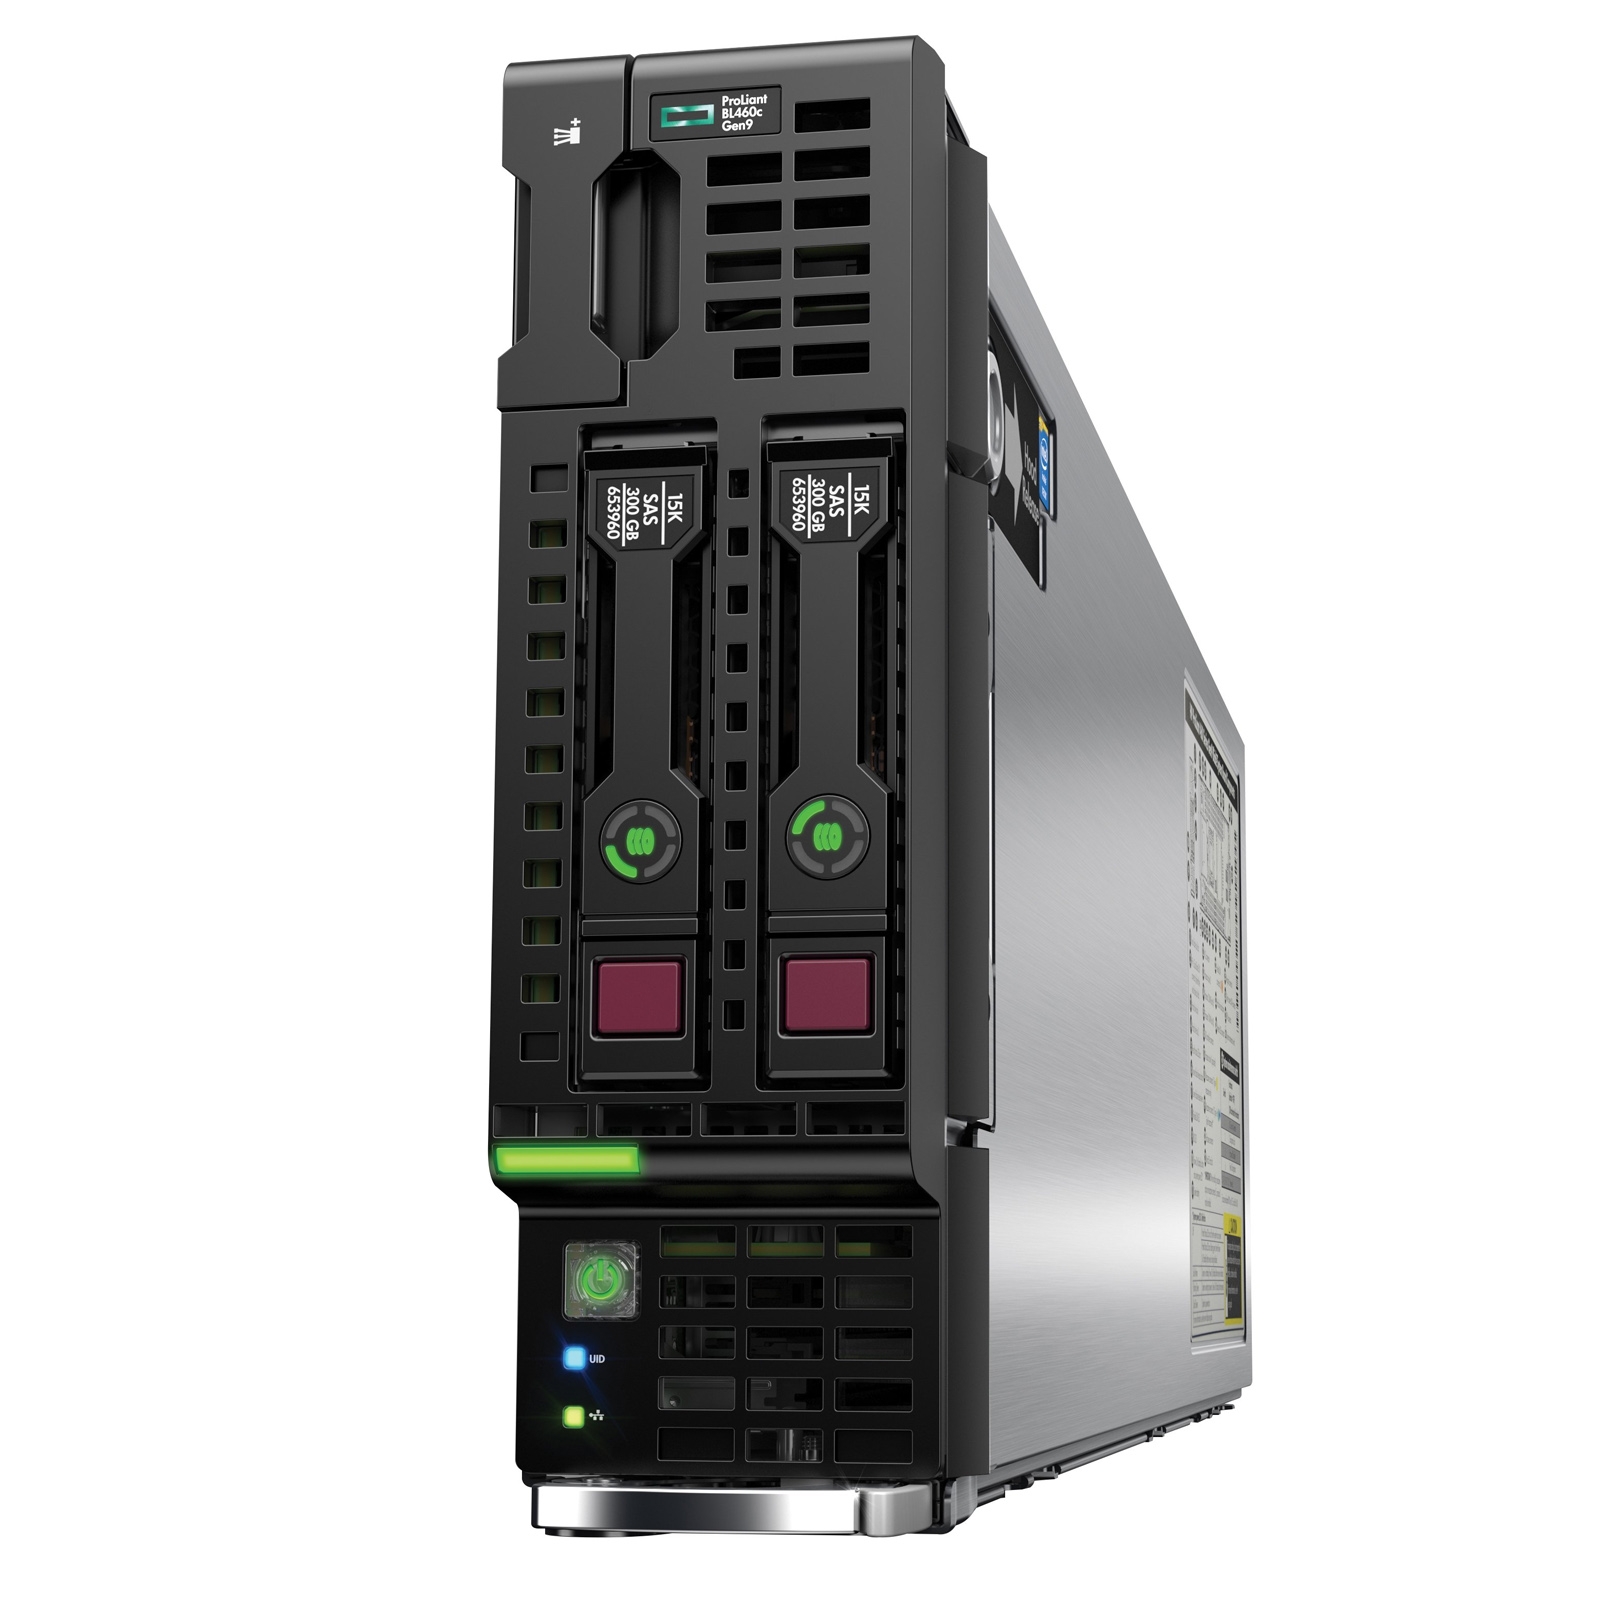 HPE BL460c G9 Blade Server 2x Fourteen 14-Core Xeon 192GB RAM Configurable Node